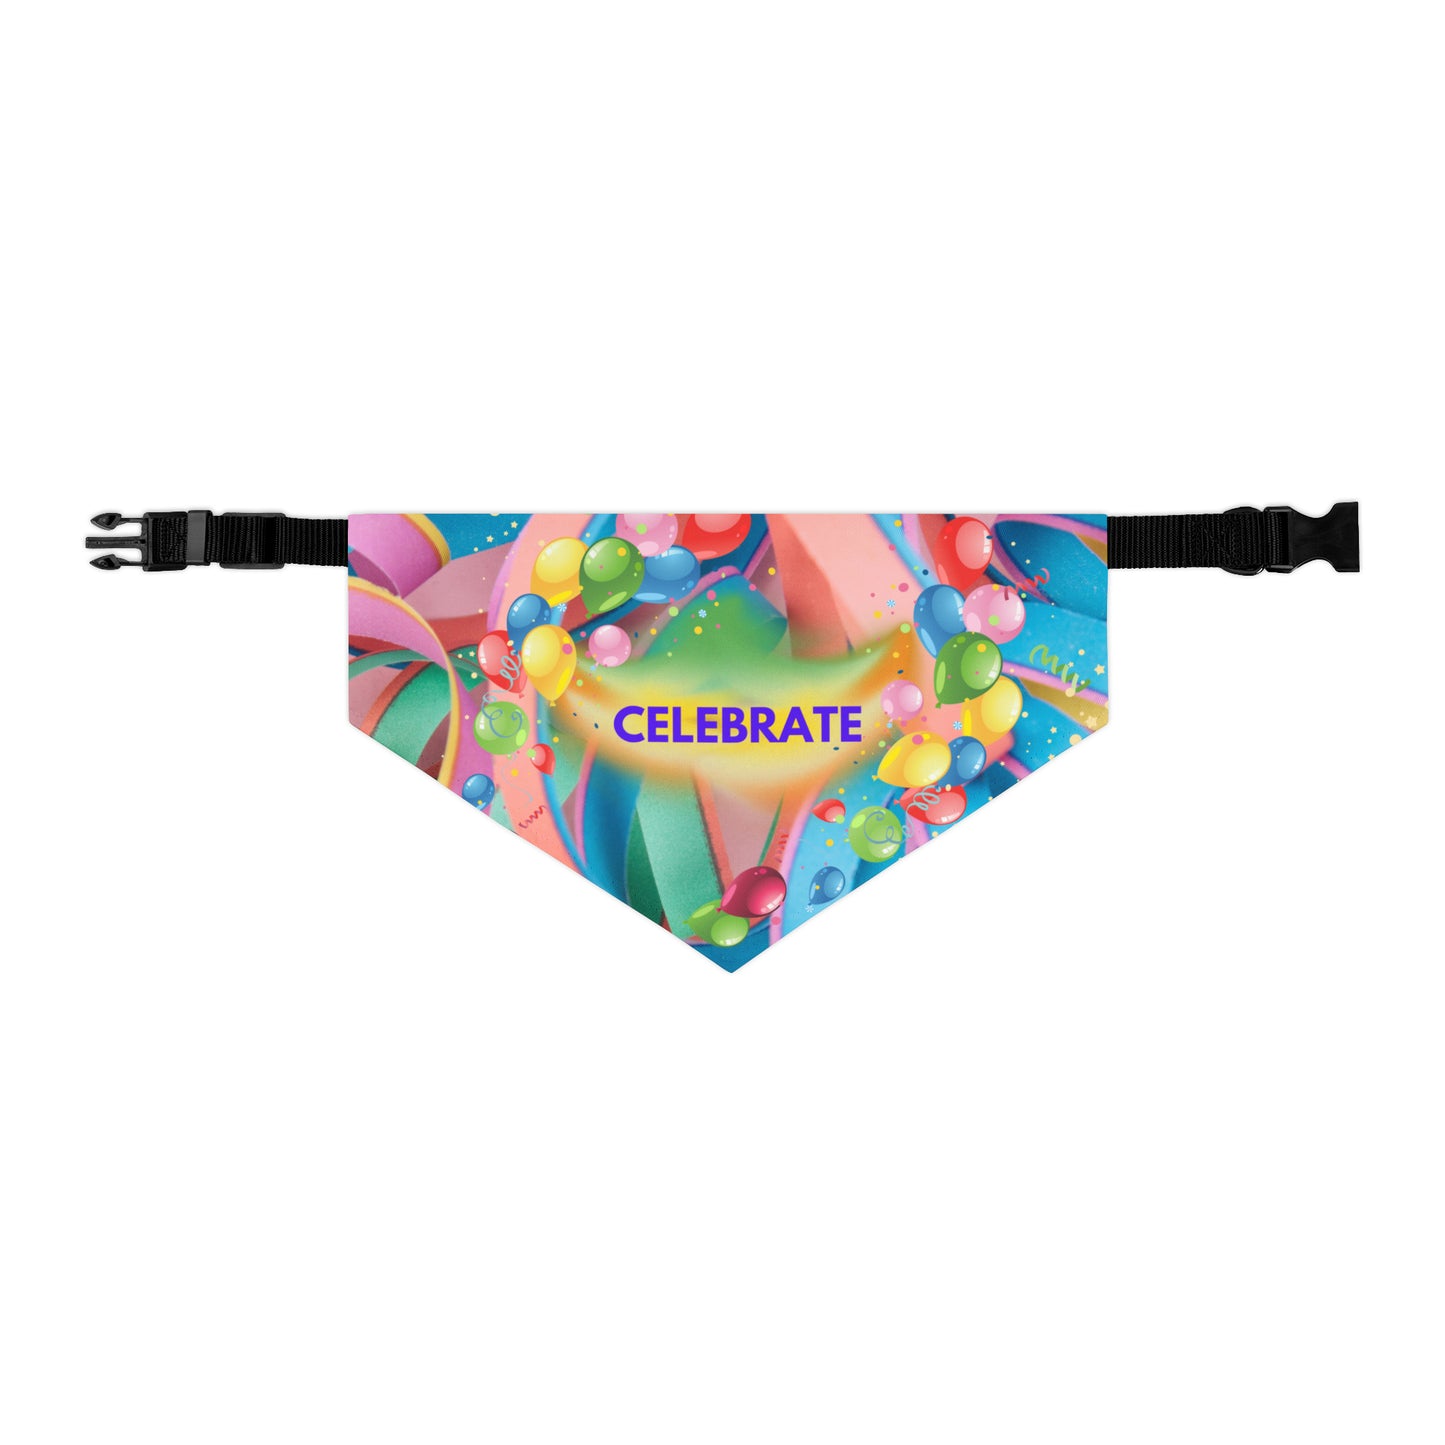 FurryFashionista Bandana COLLAR - "Celebrate" Motif - Special Occasion/Party Design